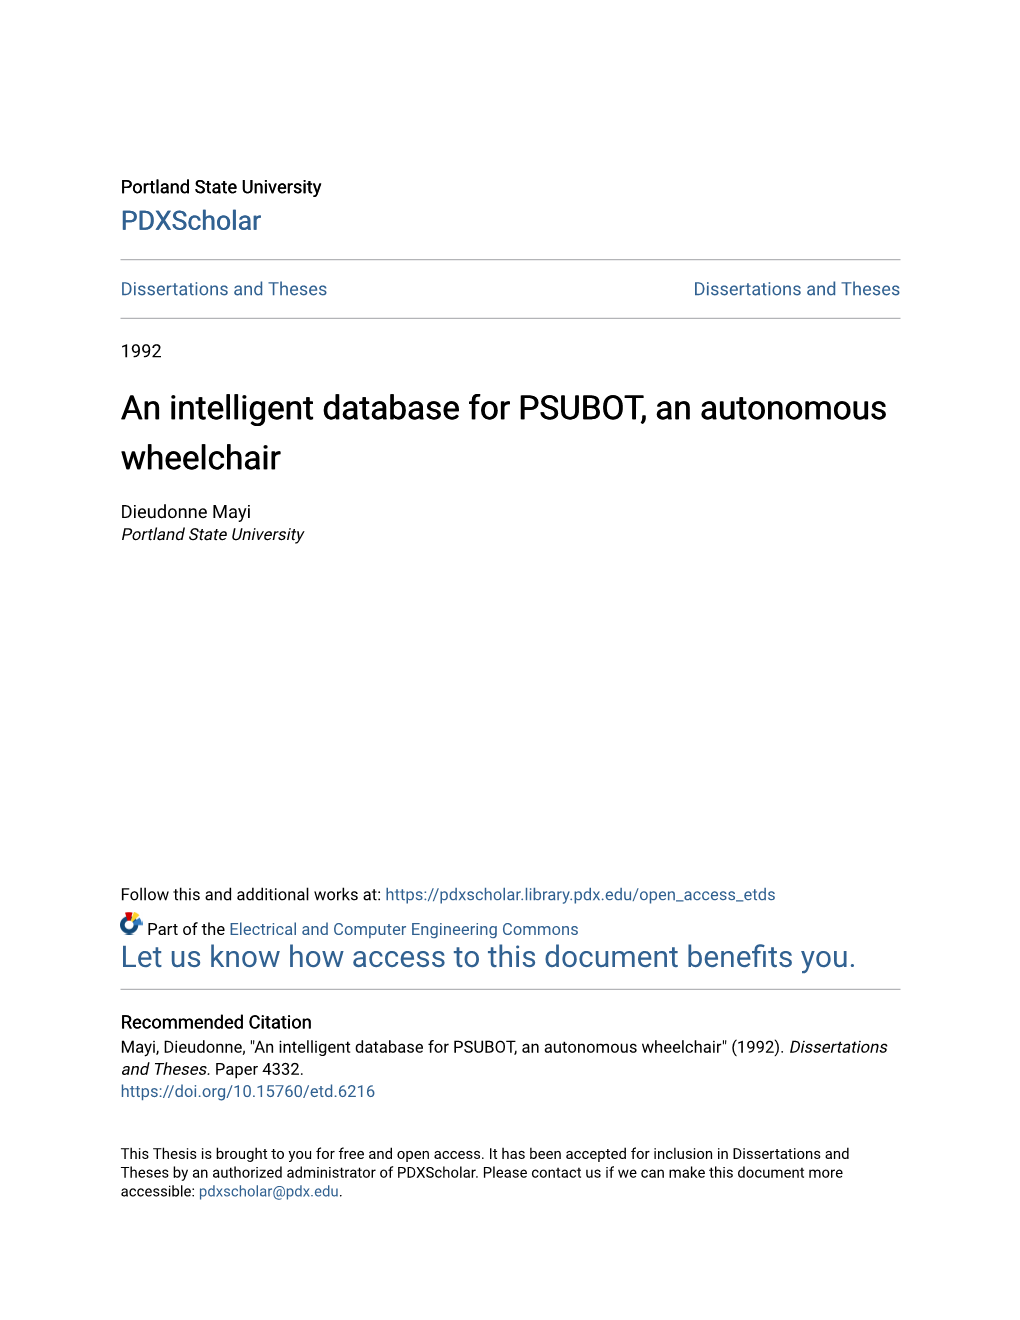 An Intelligent Database for PSUBOT, an Autonomous Wheelchair